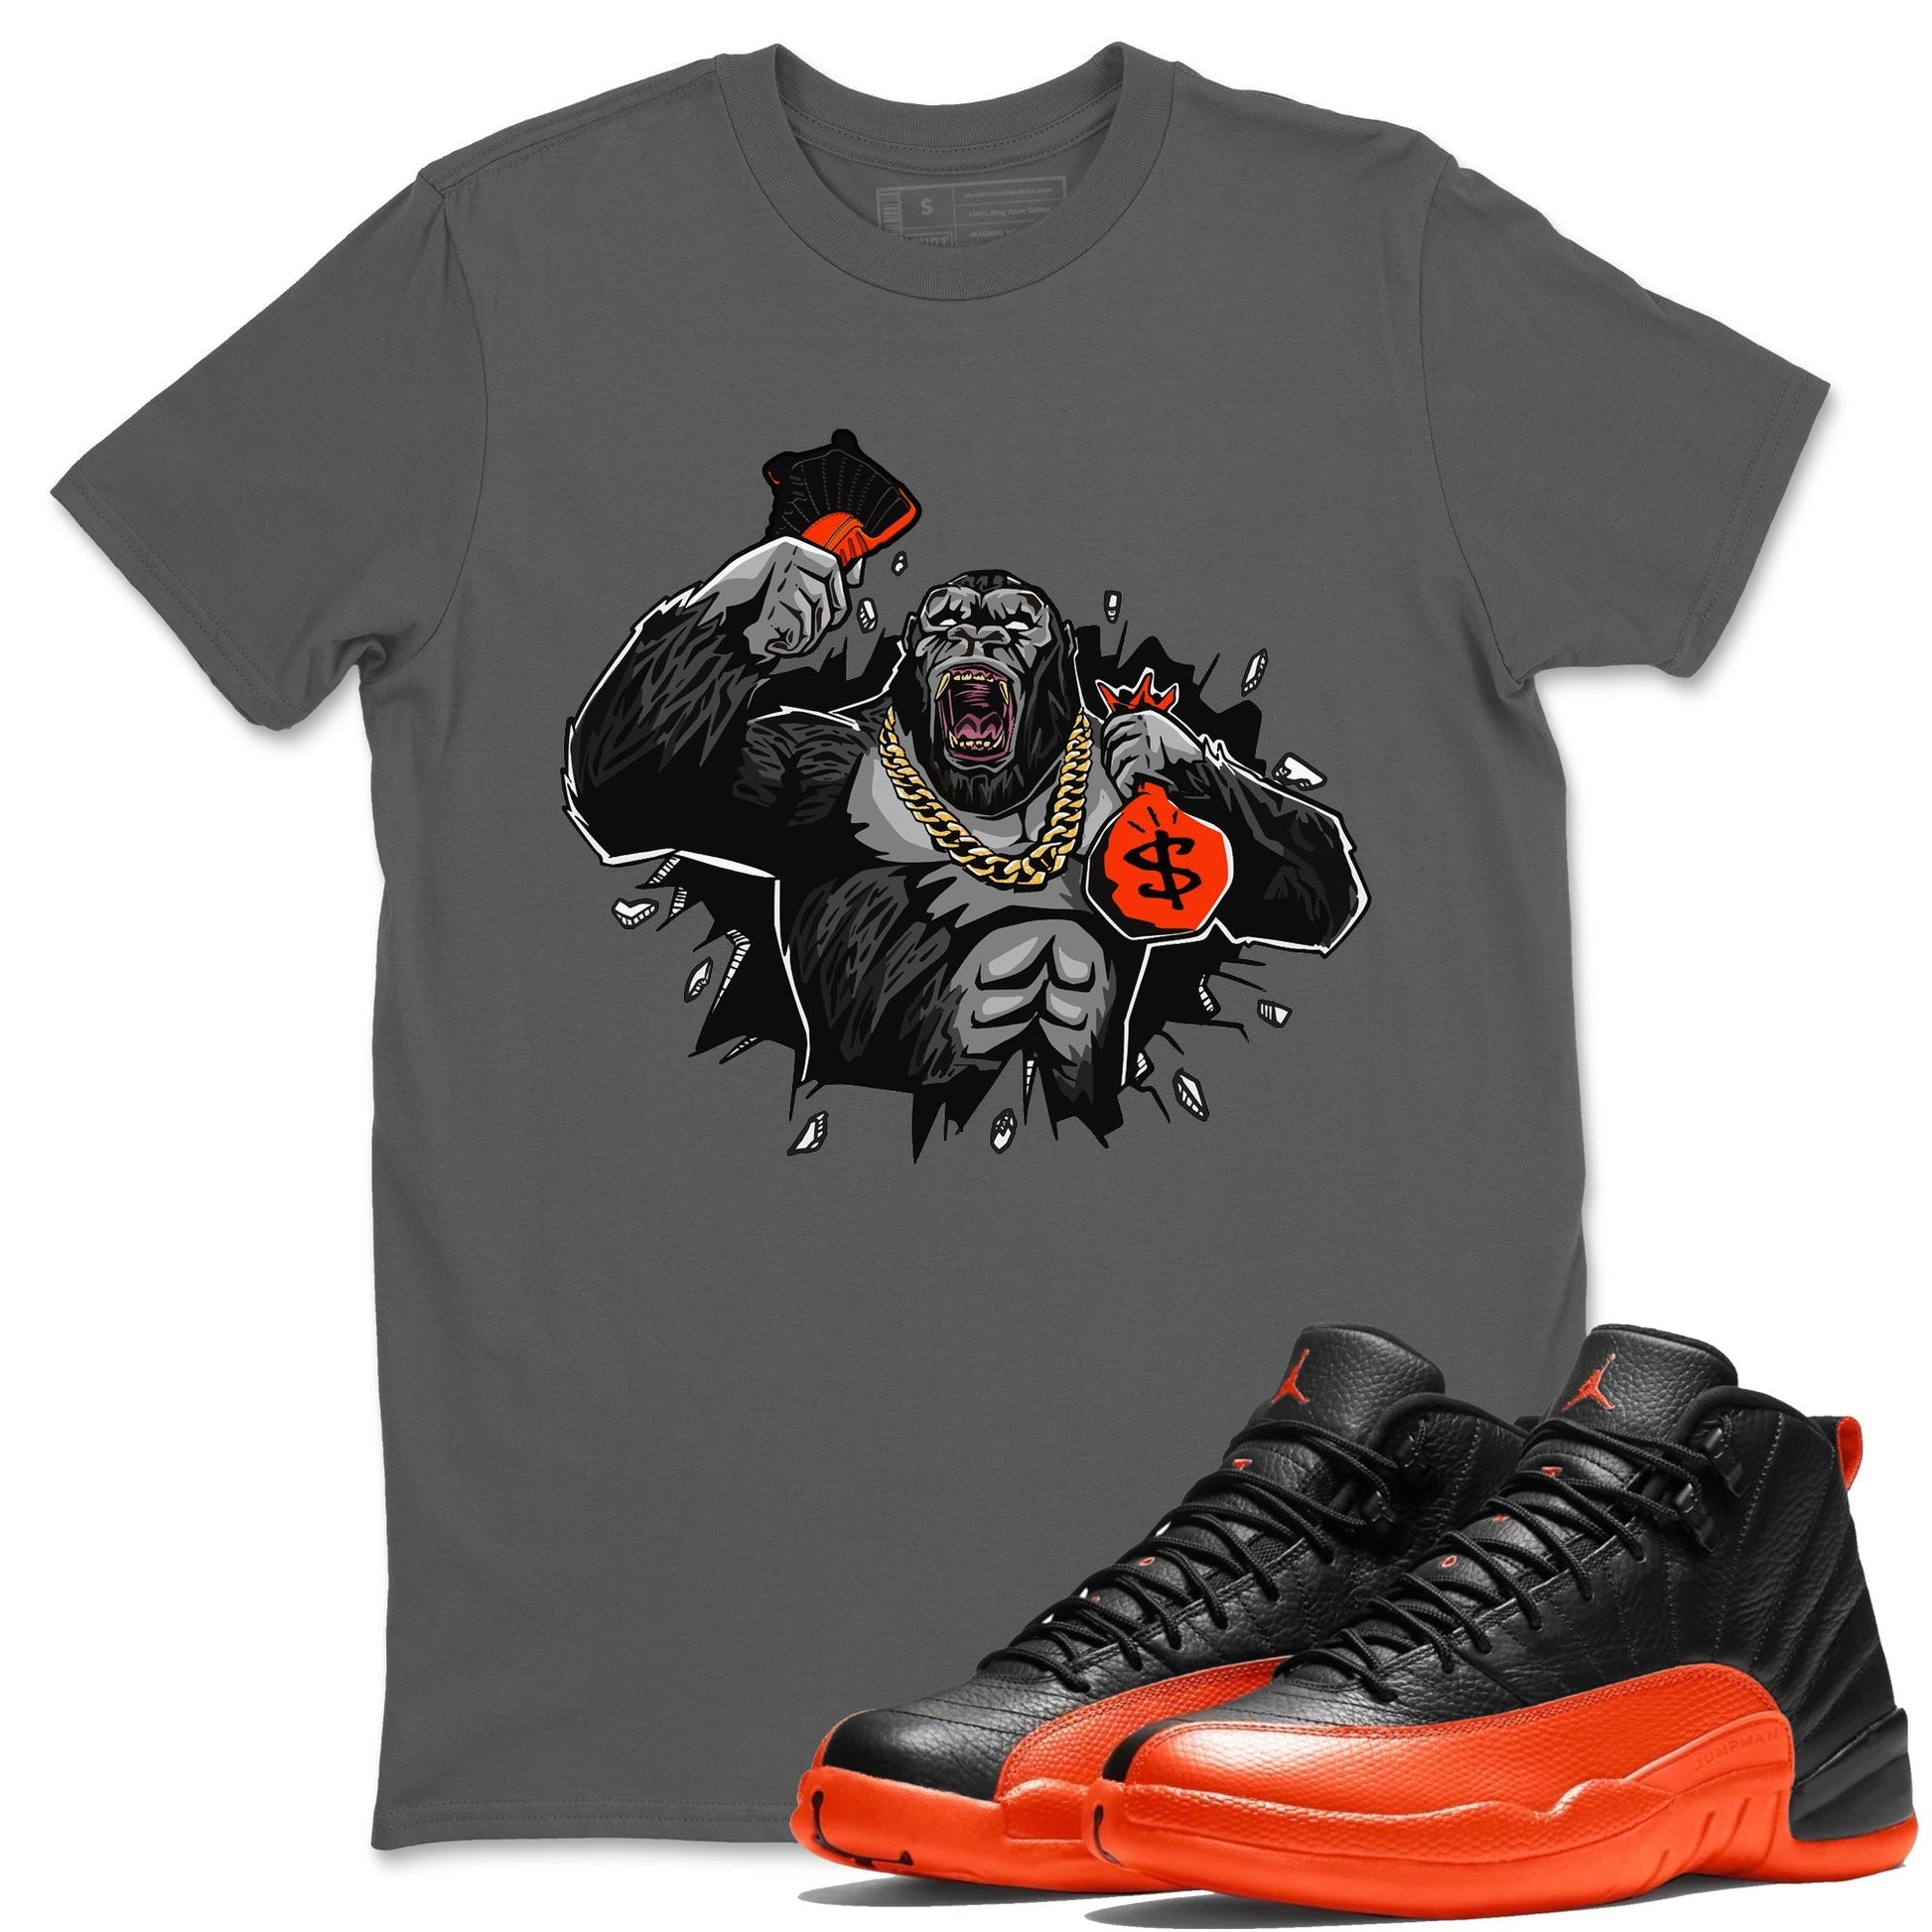 Air Jordan 12 Brilliant Orange Sneaker Match Tees Hustle Gorilla Sneaker Tees AJ12 Brilliant Orange Sneaker Release Tees Unisex Shirts Cool Grey 2